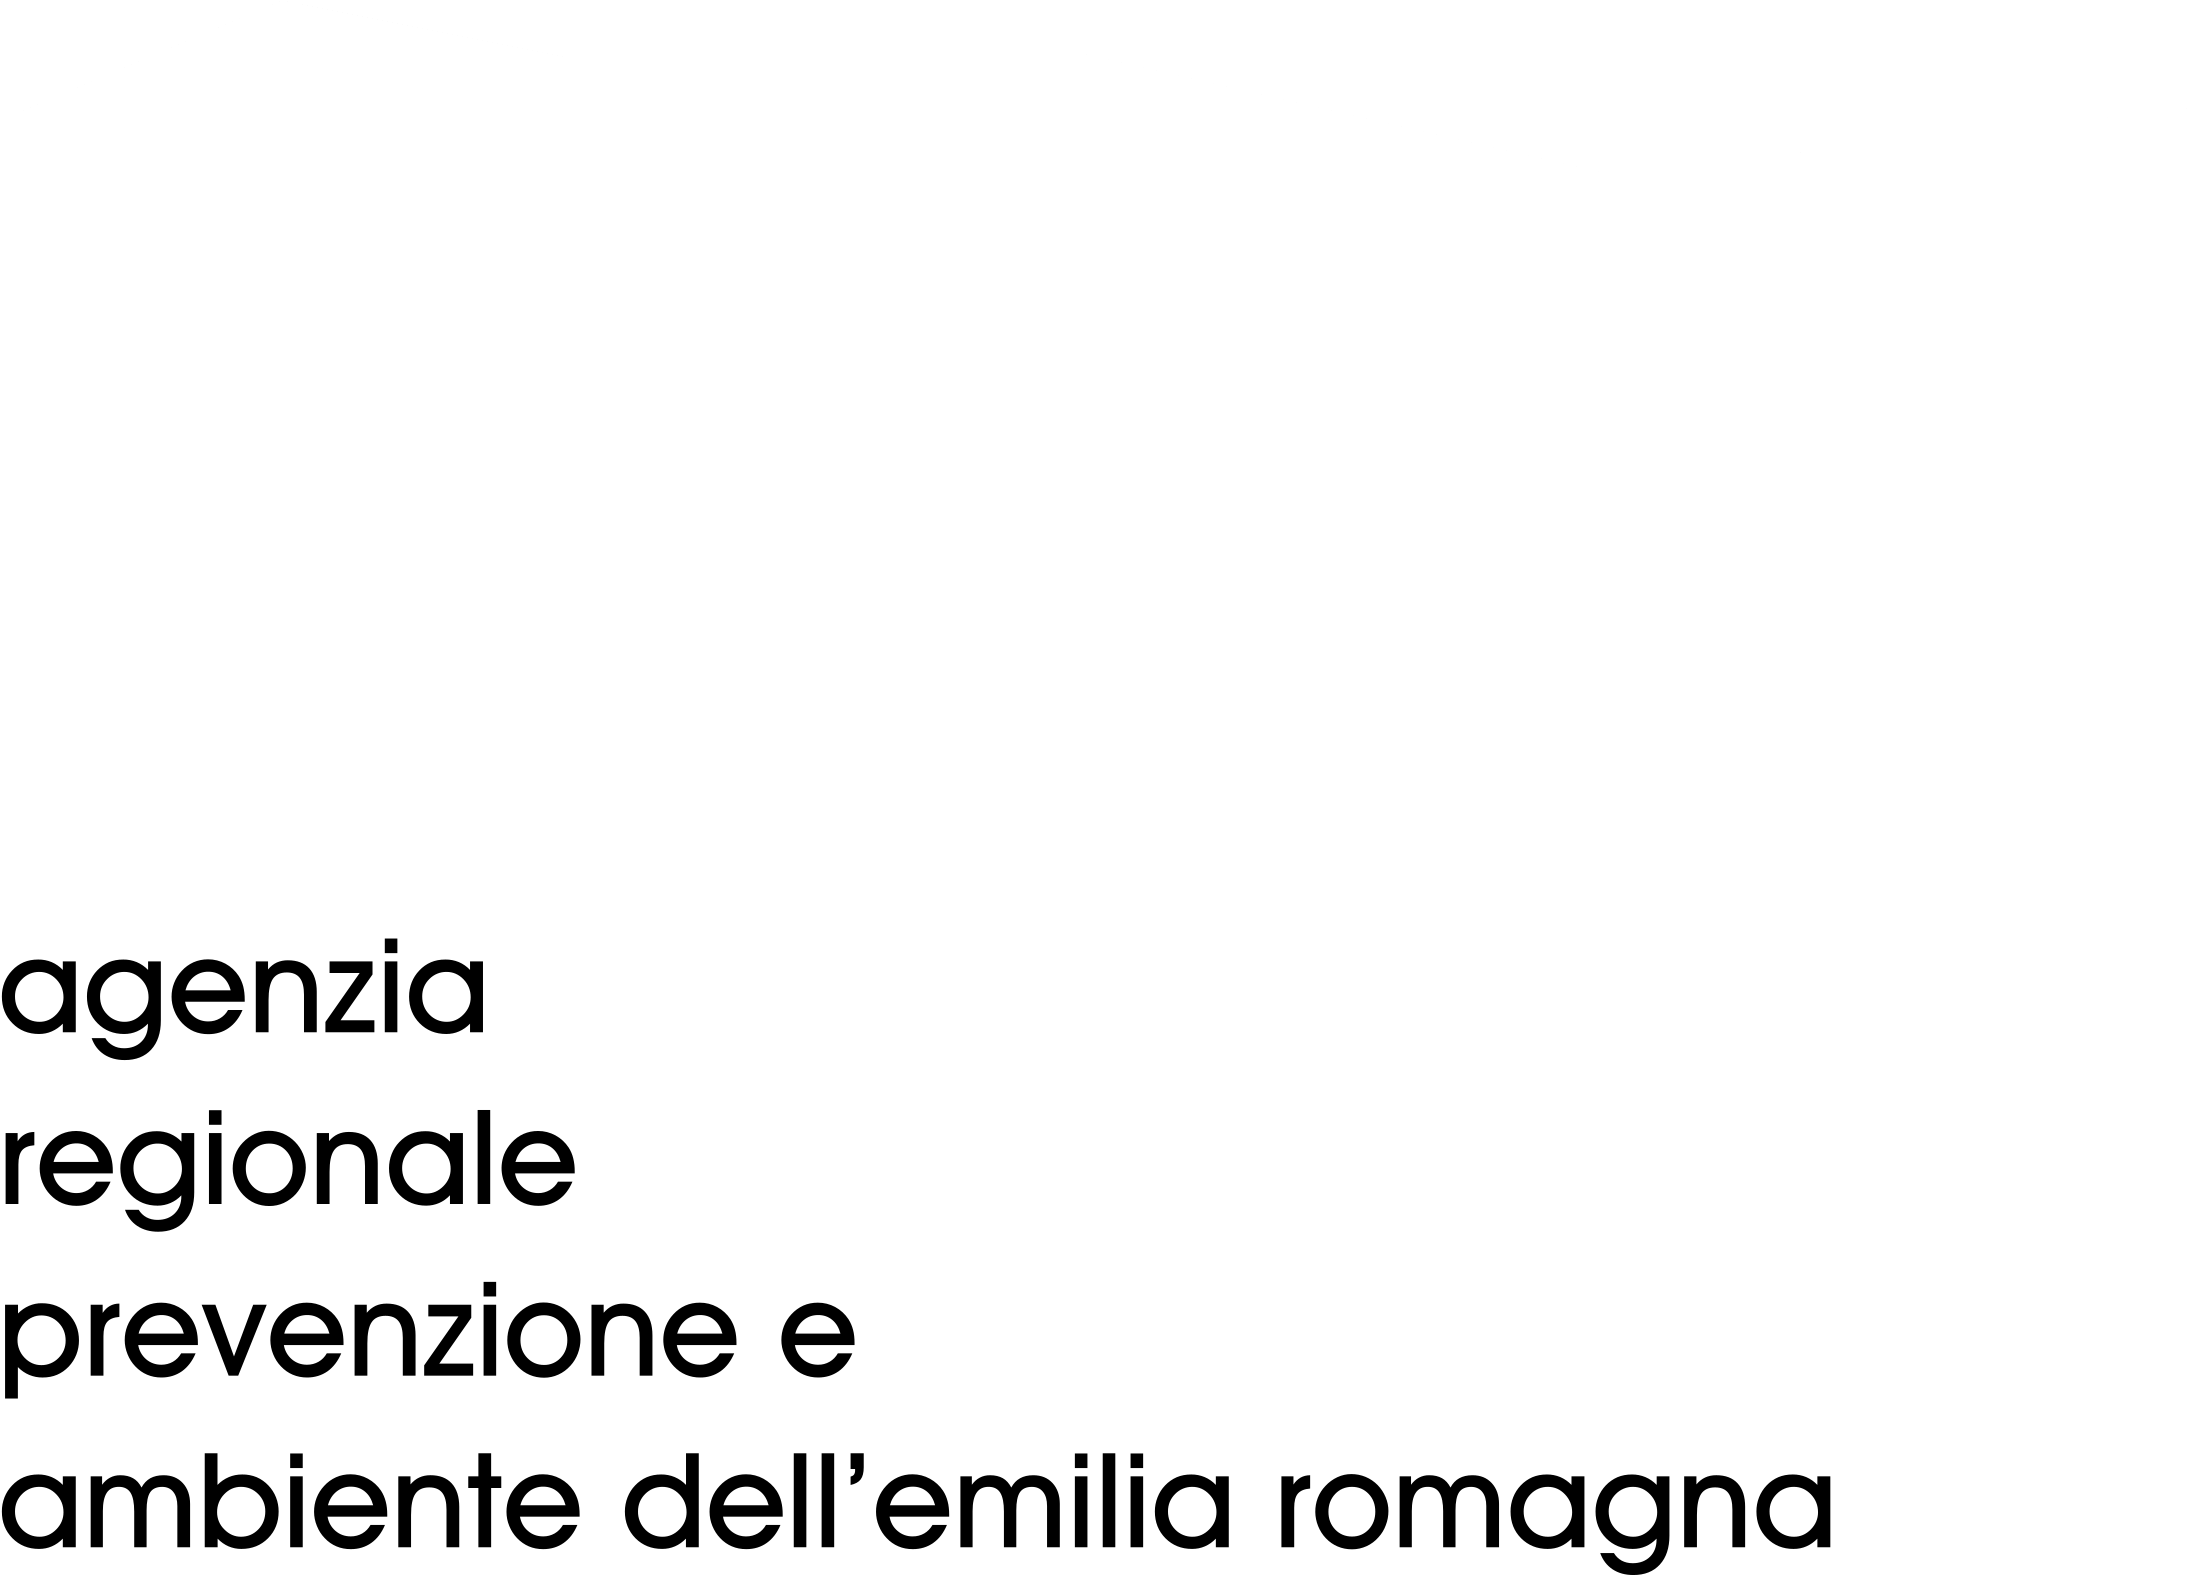 Arpa 01 Logo Black And White Regional Environmental